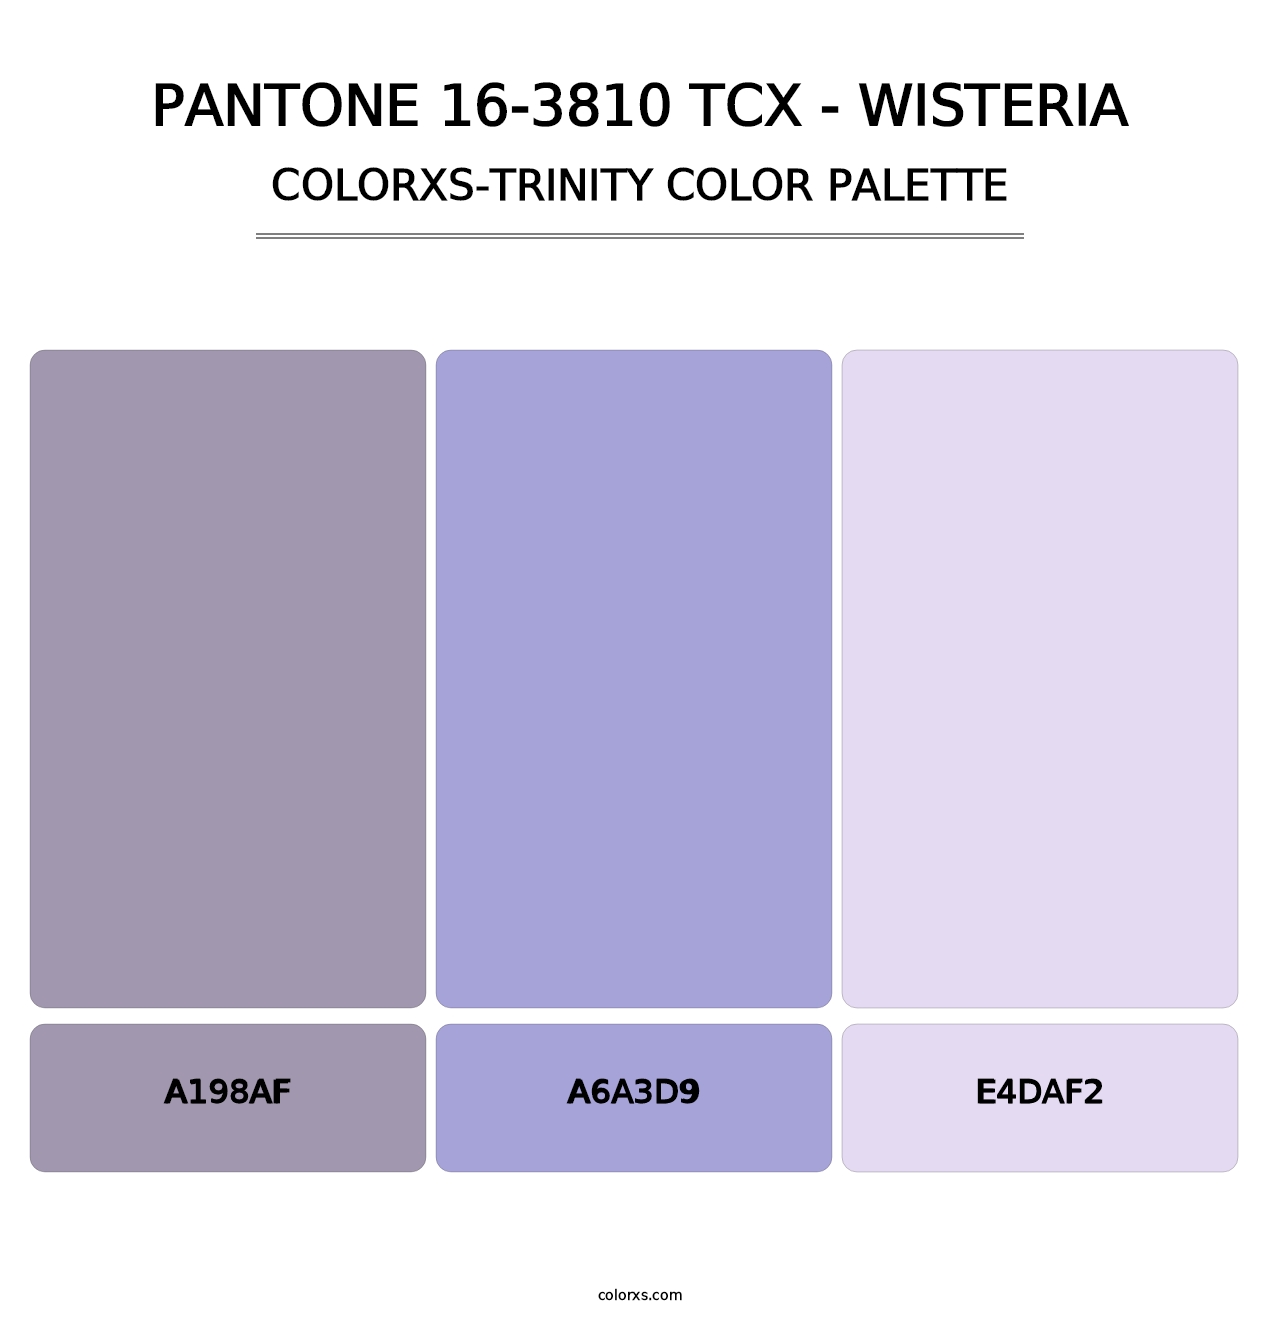 PANTONE 16-3810 TCX - Wisteria - Colorxs Trinity Palette